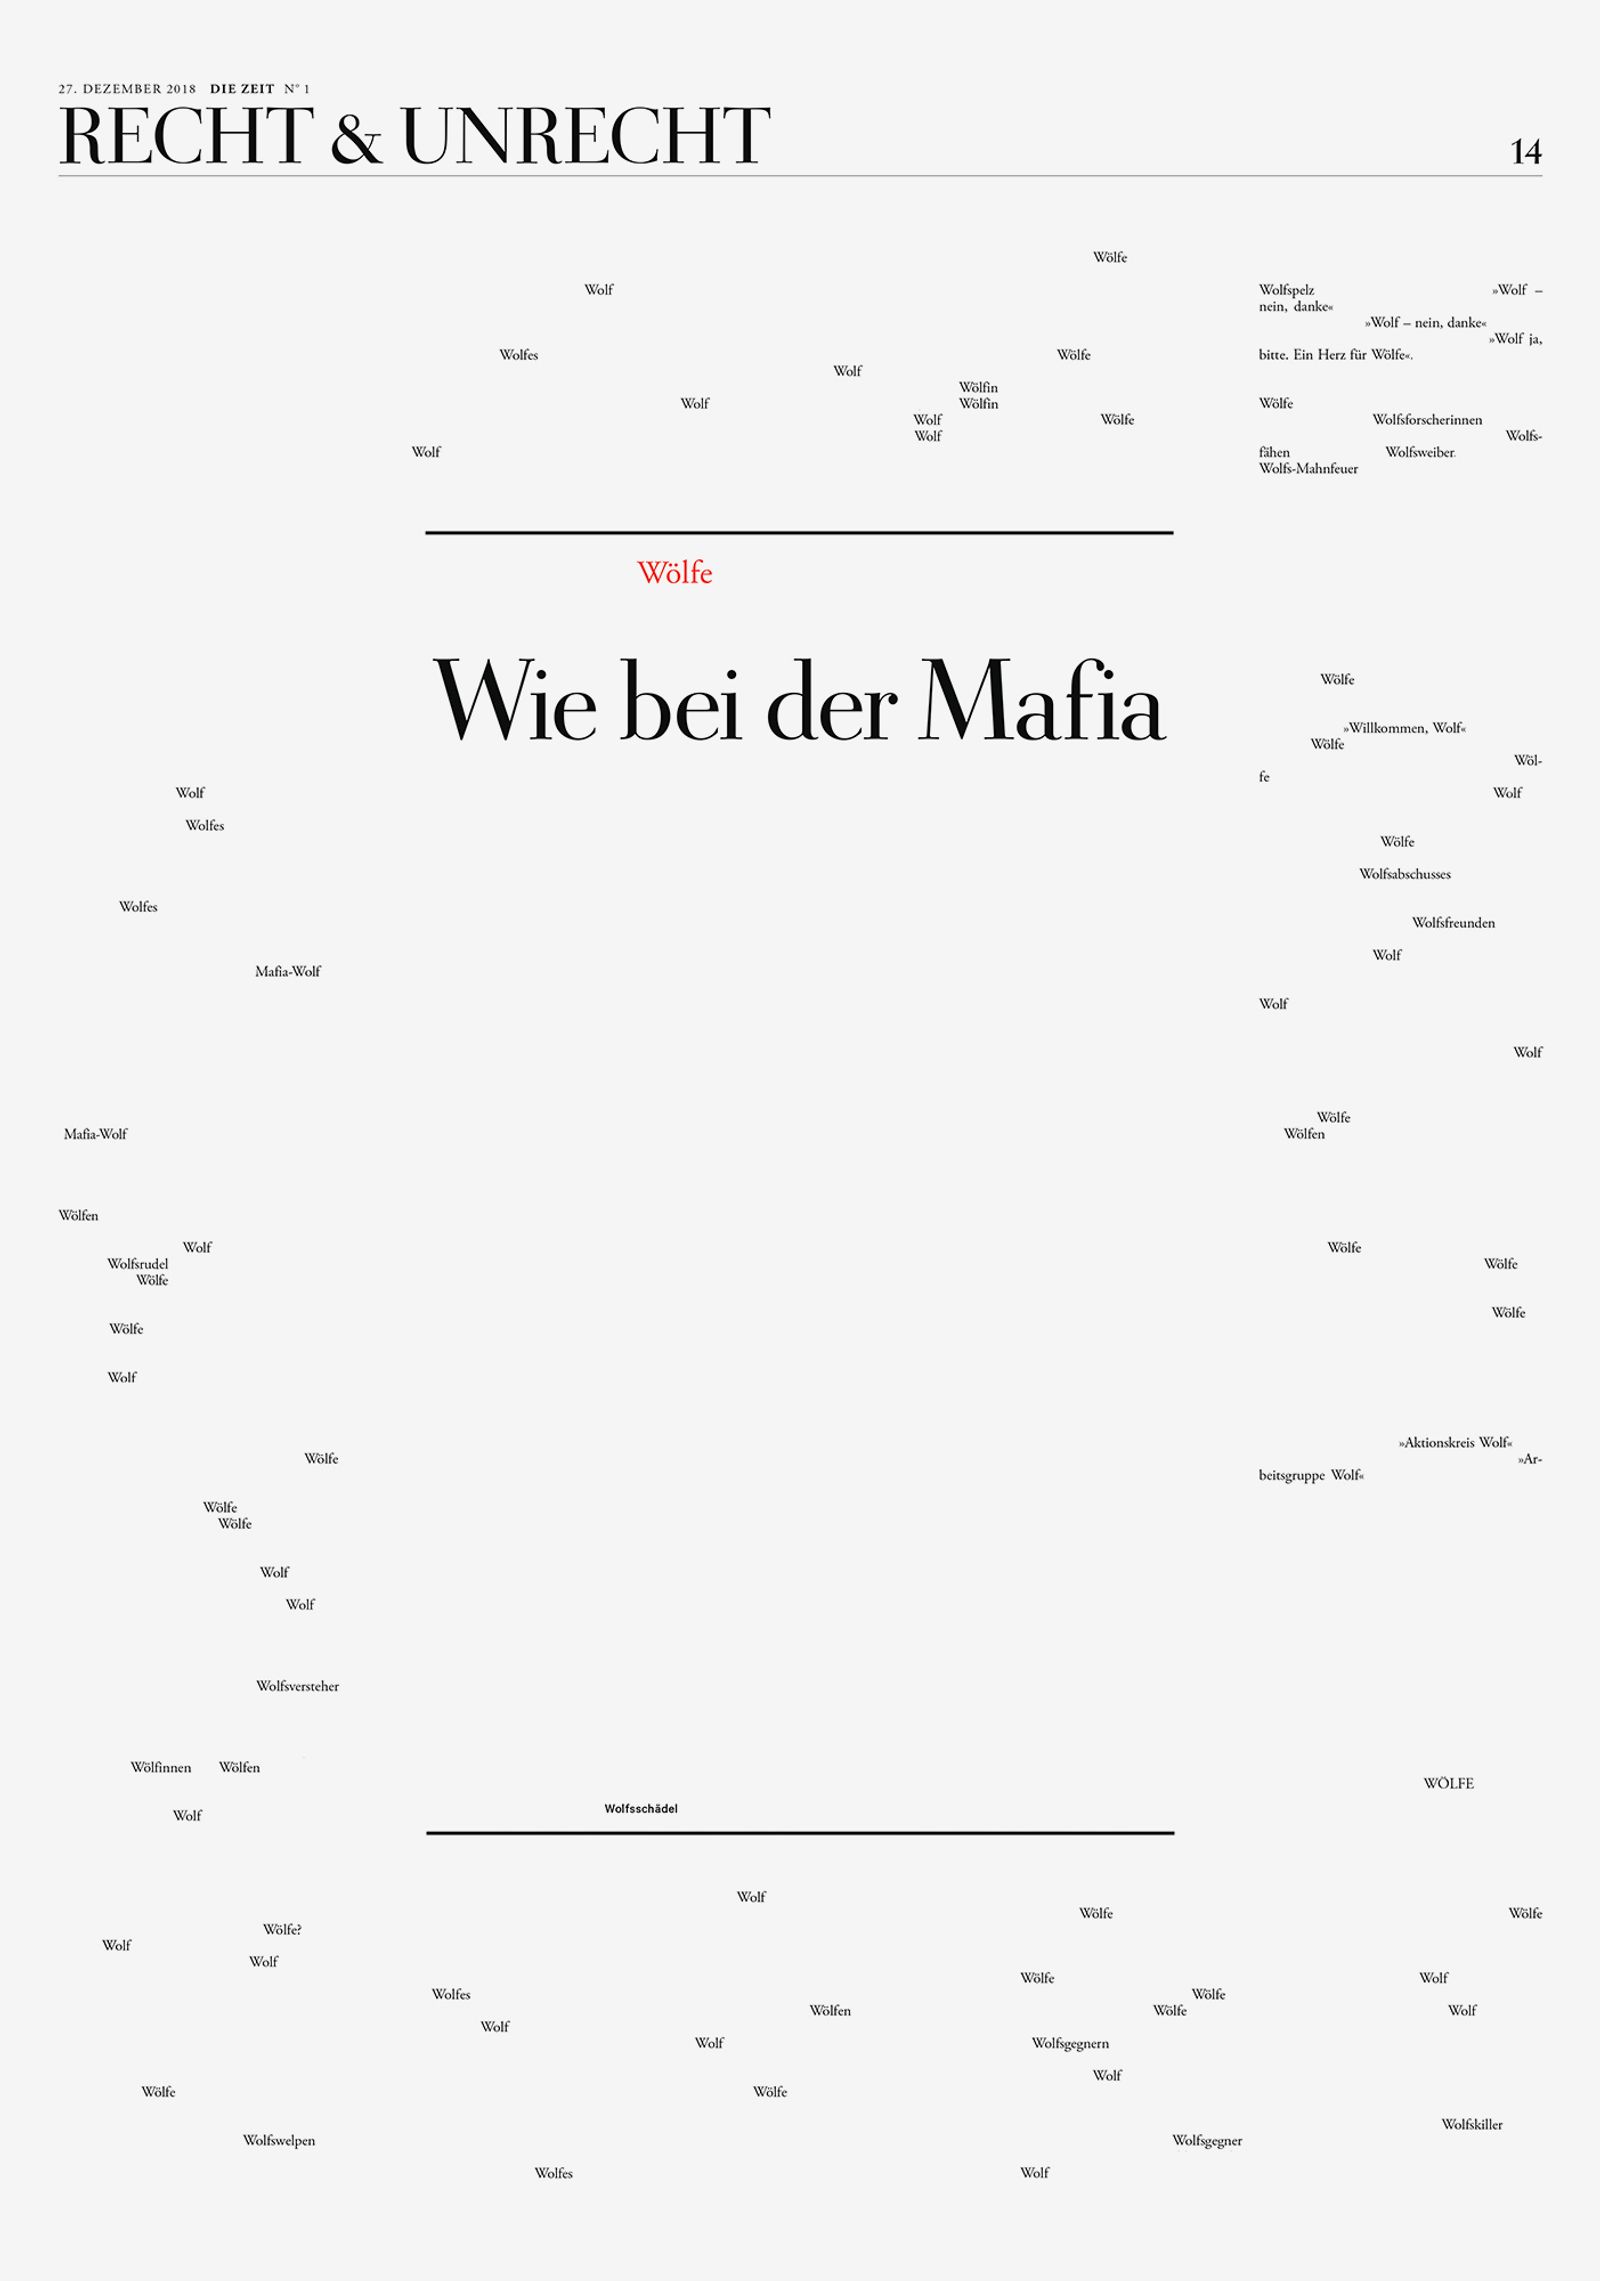 © Hannes Jung - Newspaper "Die Zeit", title: "Like the mafia"